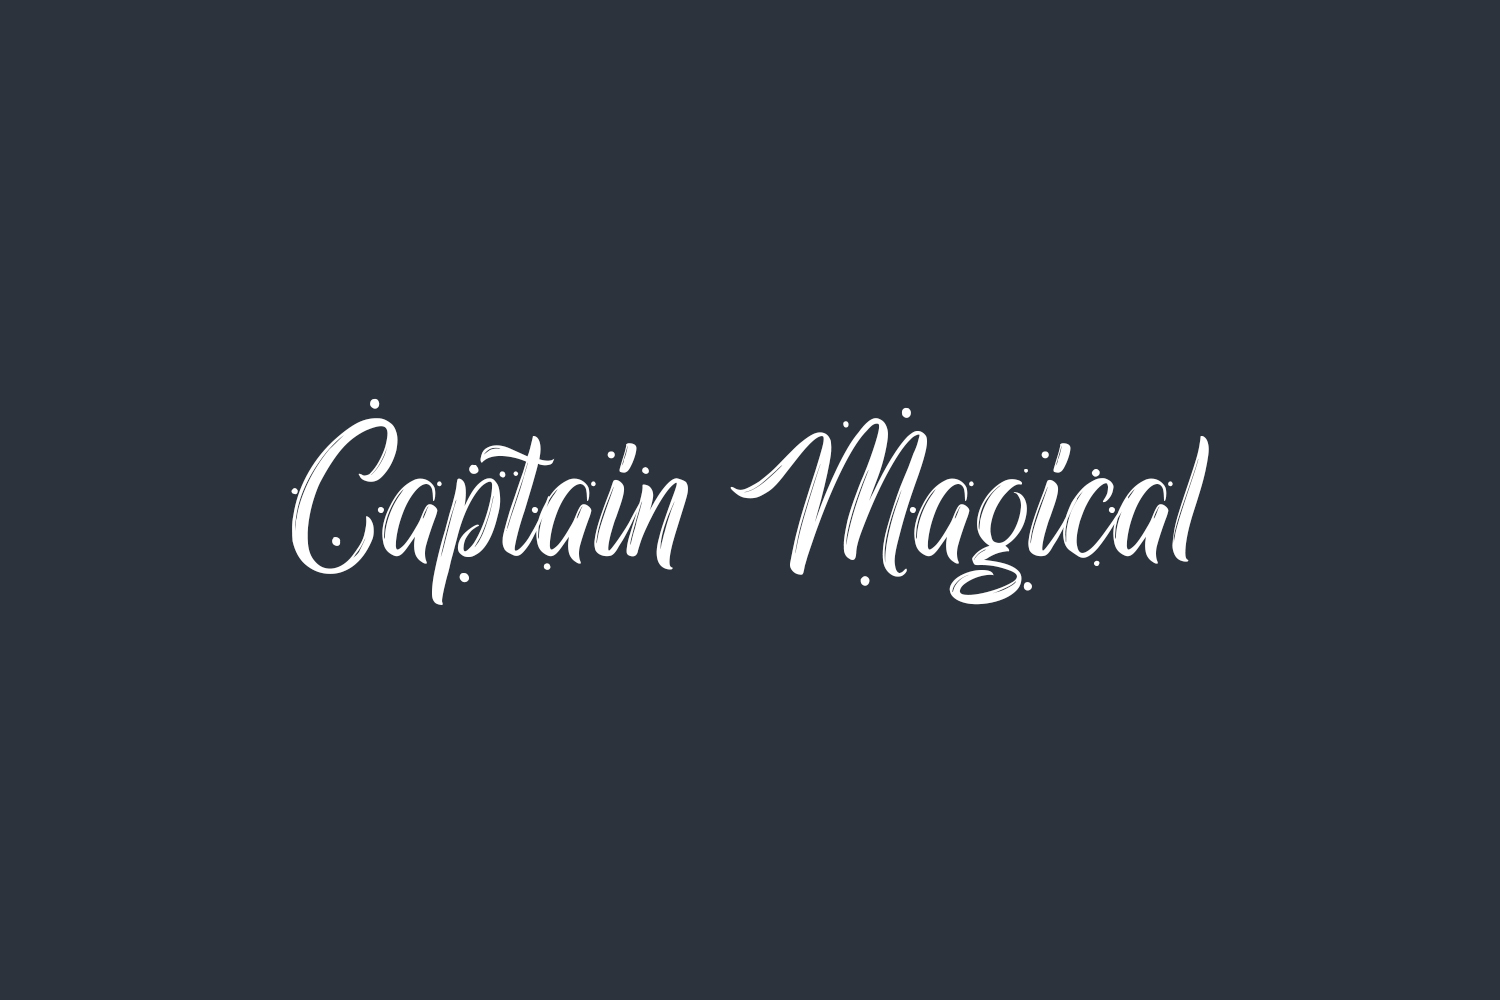 Captain Magical Free Font